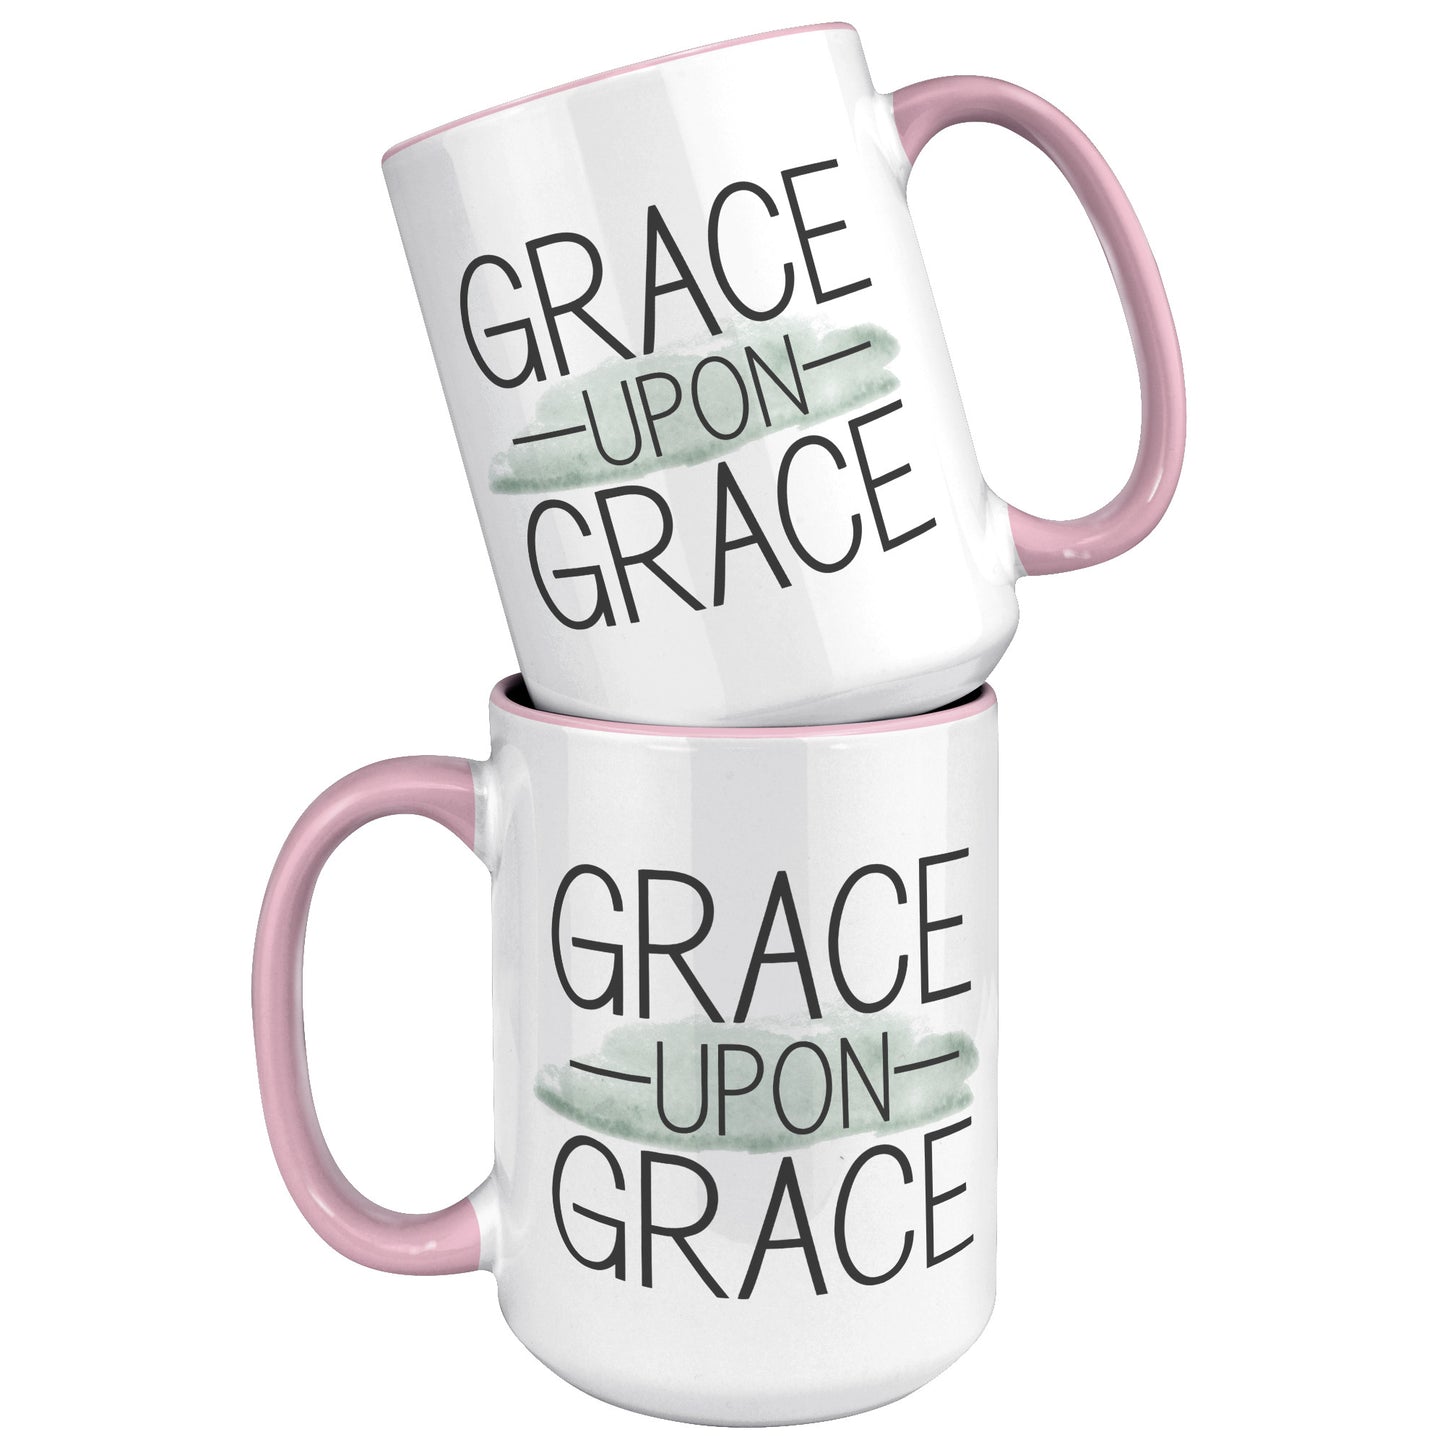 Grace Upon Grace 15 oz Ceramic Green Accent Mug